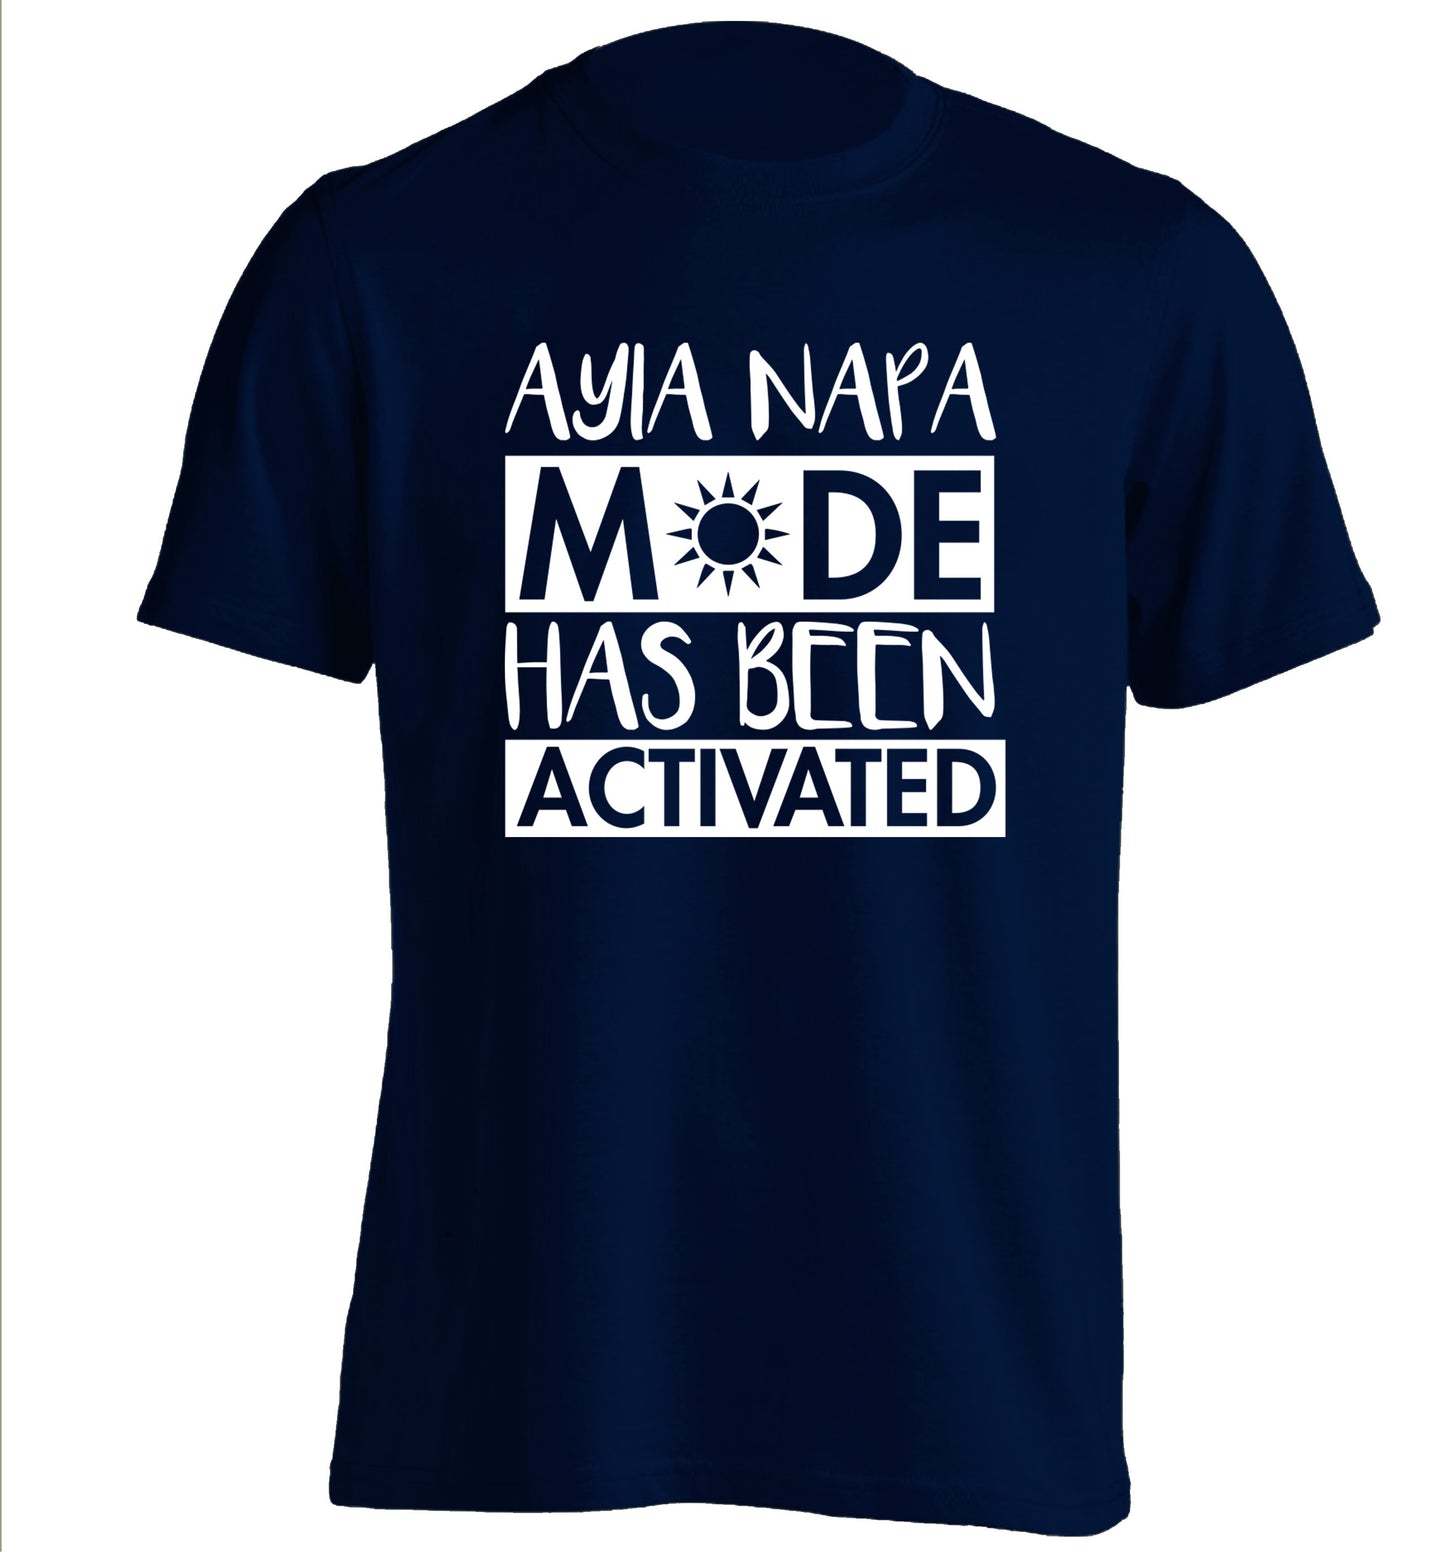 Aiya Napa mode has been activated adults unisex navy Tshirt 2XL